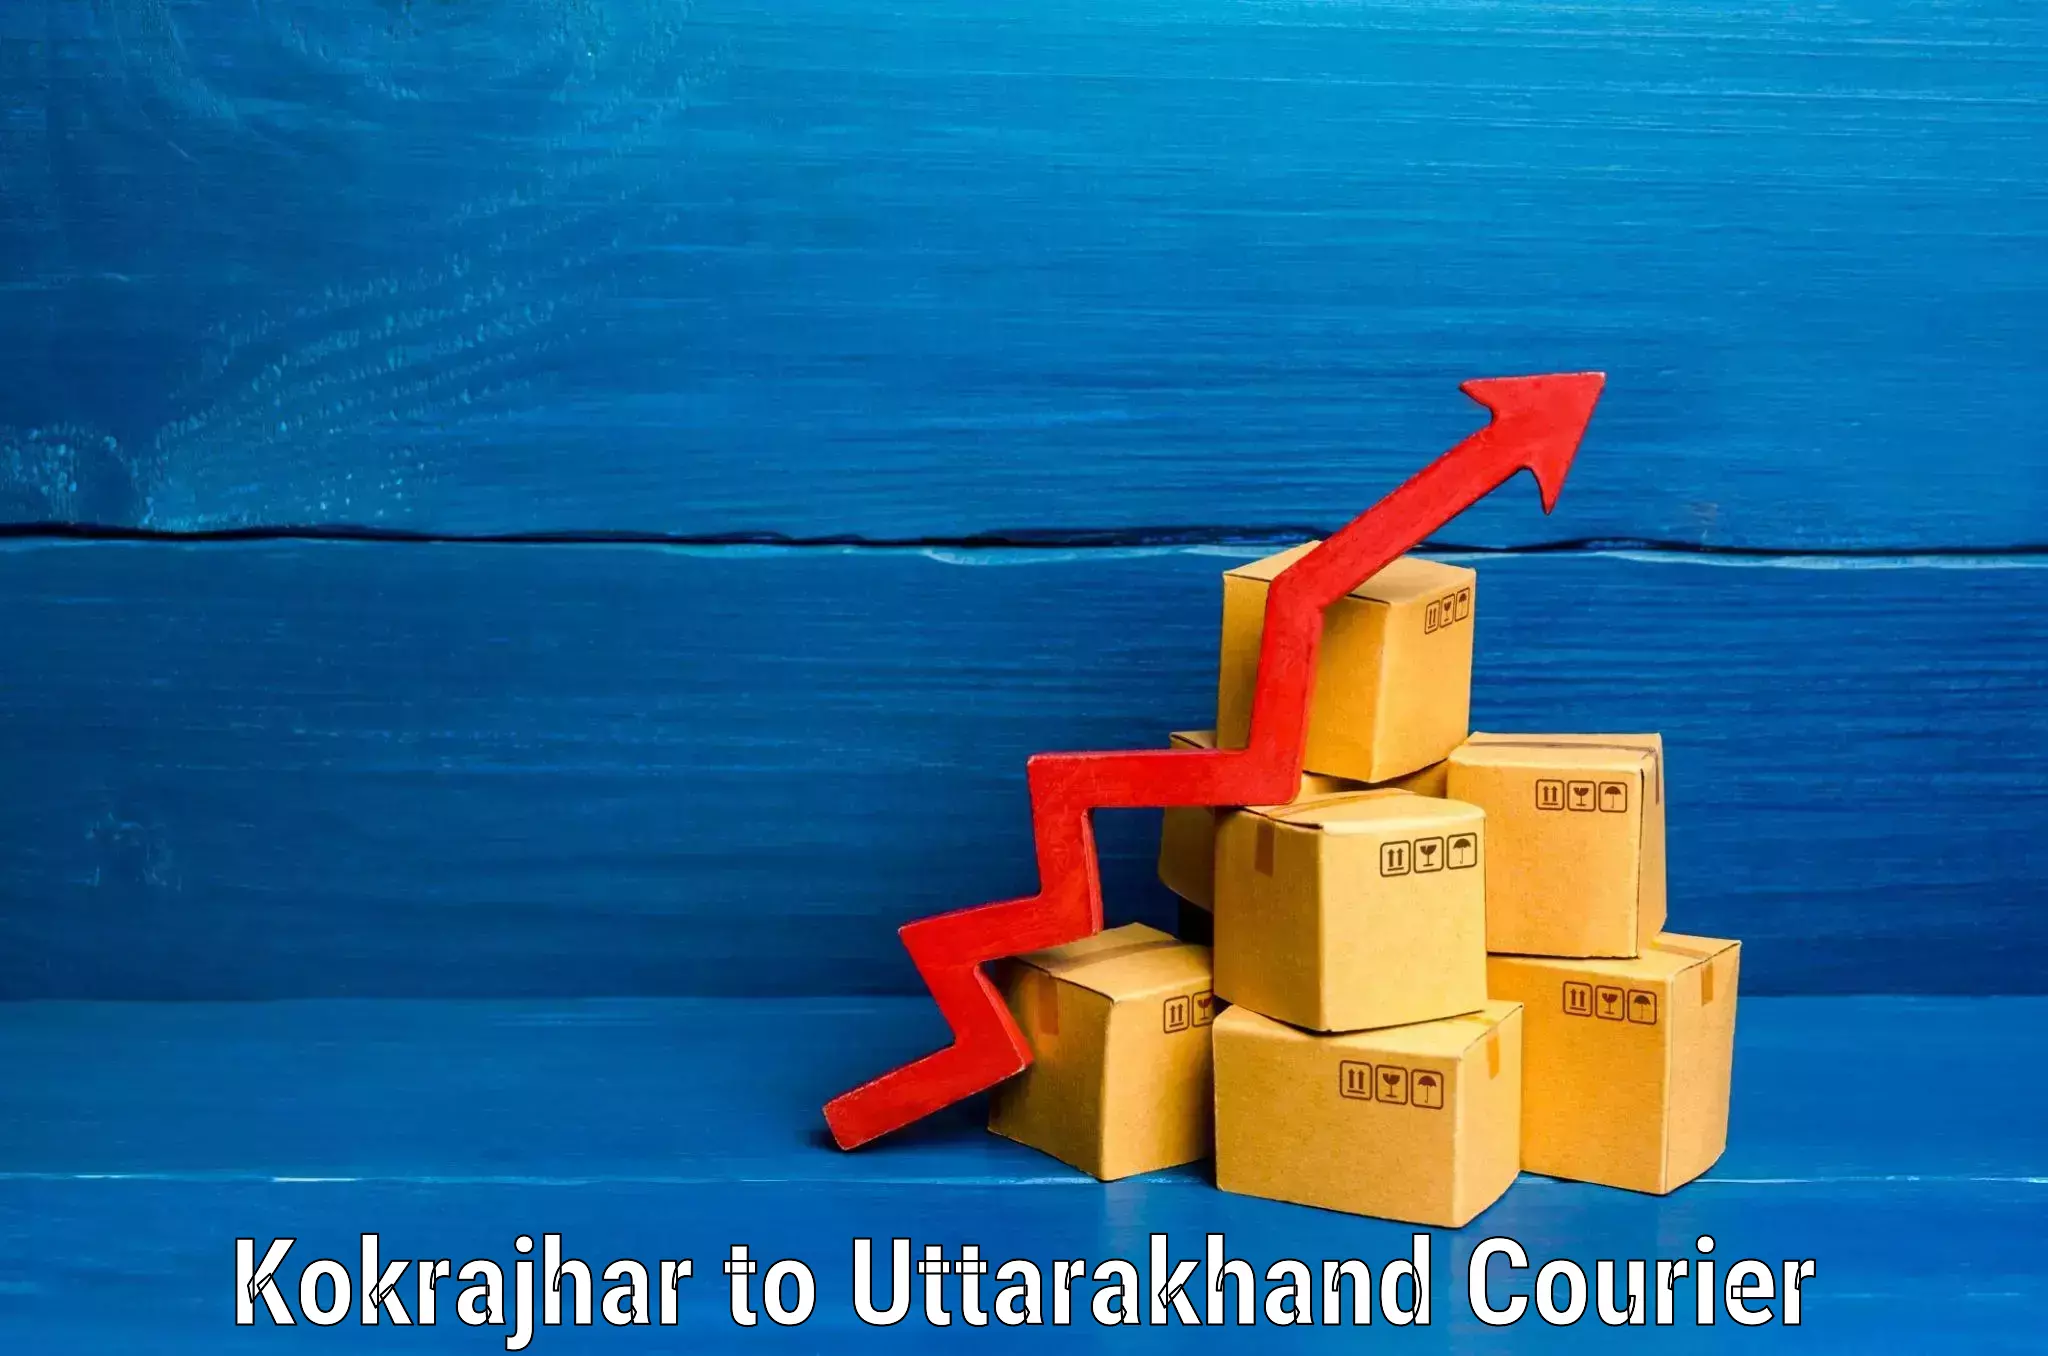 Luggage delivery network Kokrajhar to Haridwar